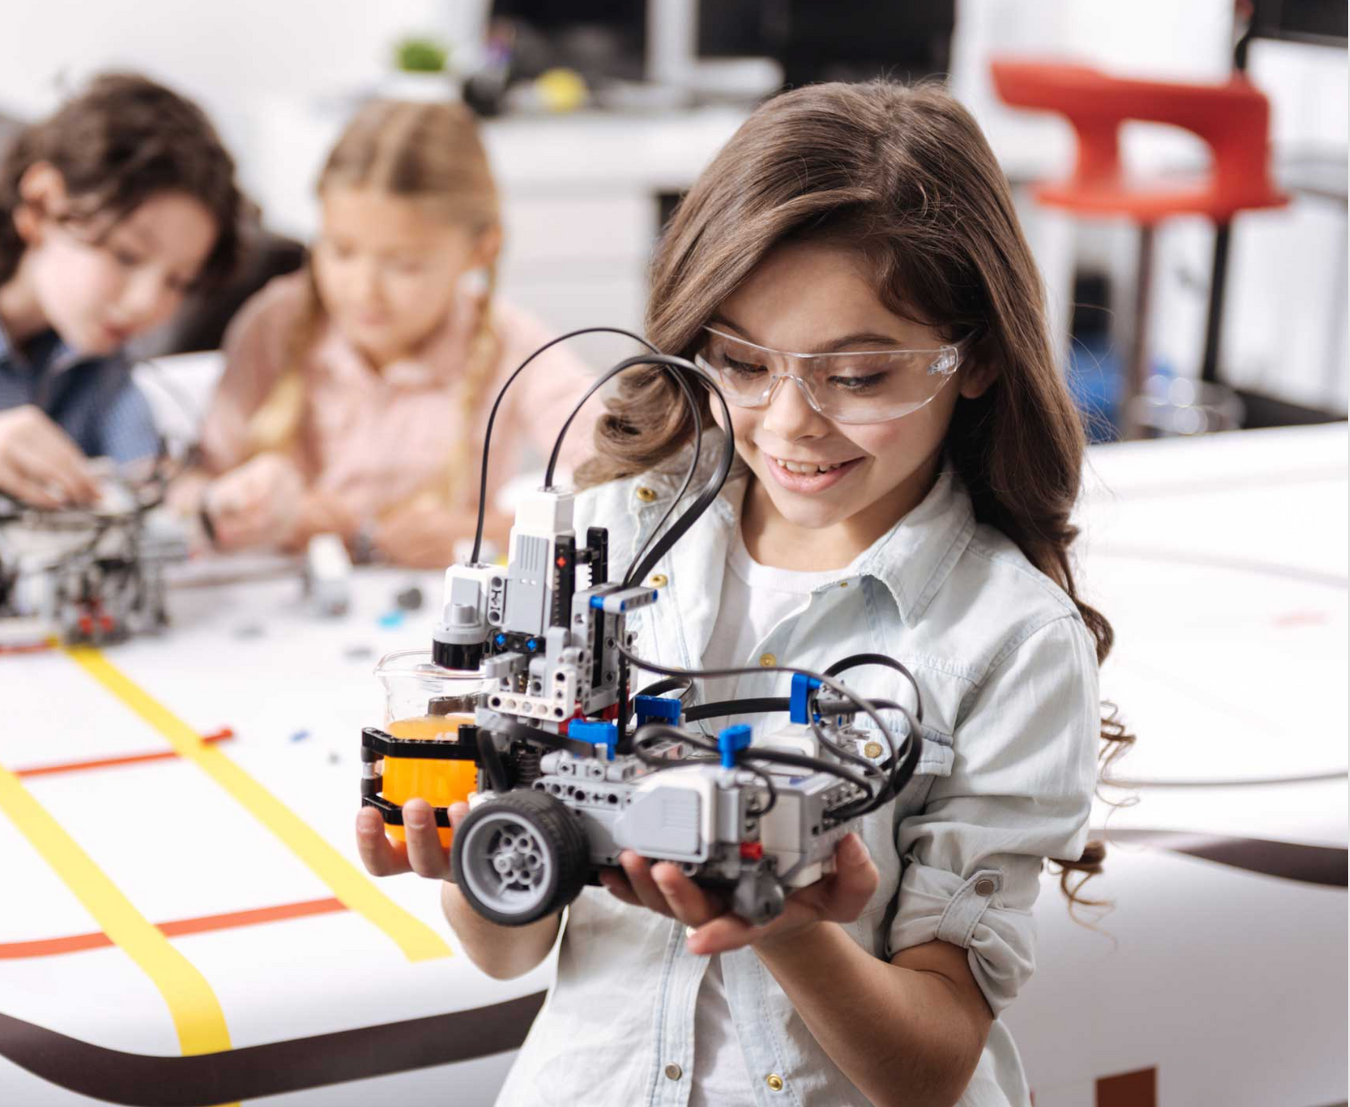 Girl building scientific invention